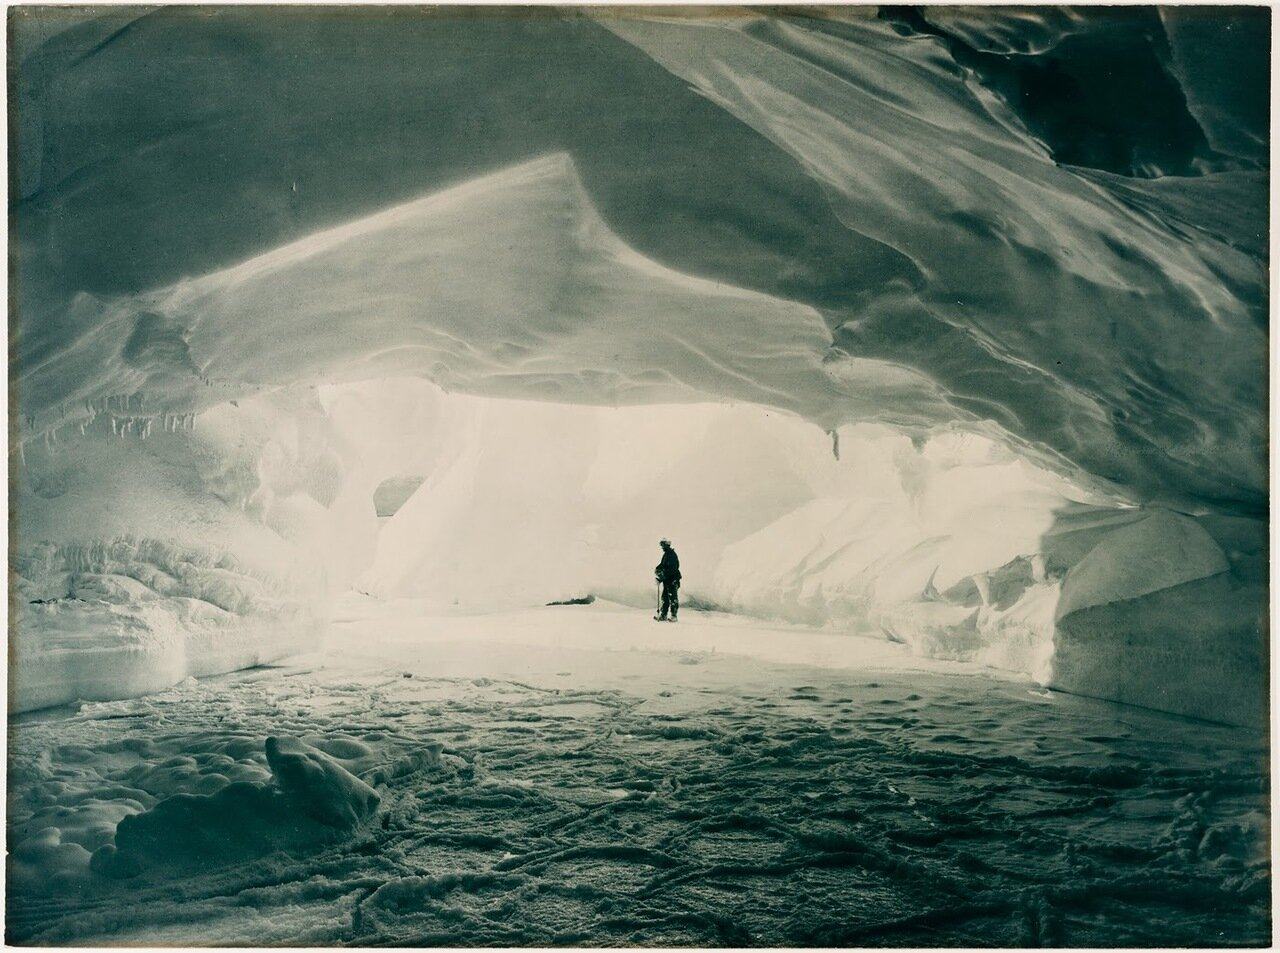 Obrázek The Imperial Trans-Antarctic Expedition of 1914 1917 d